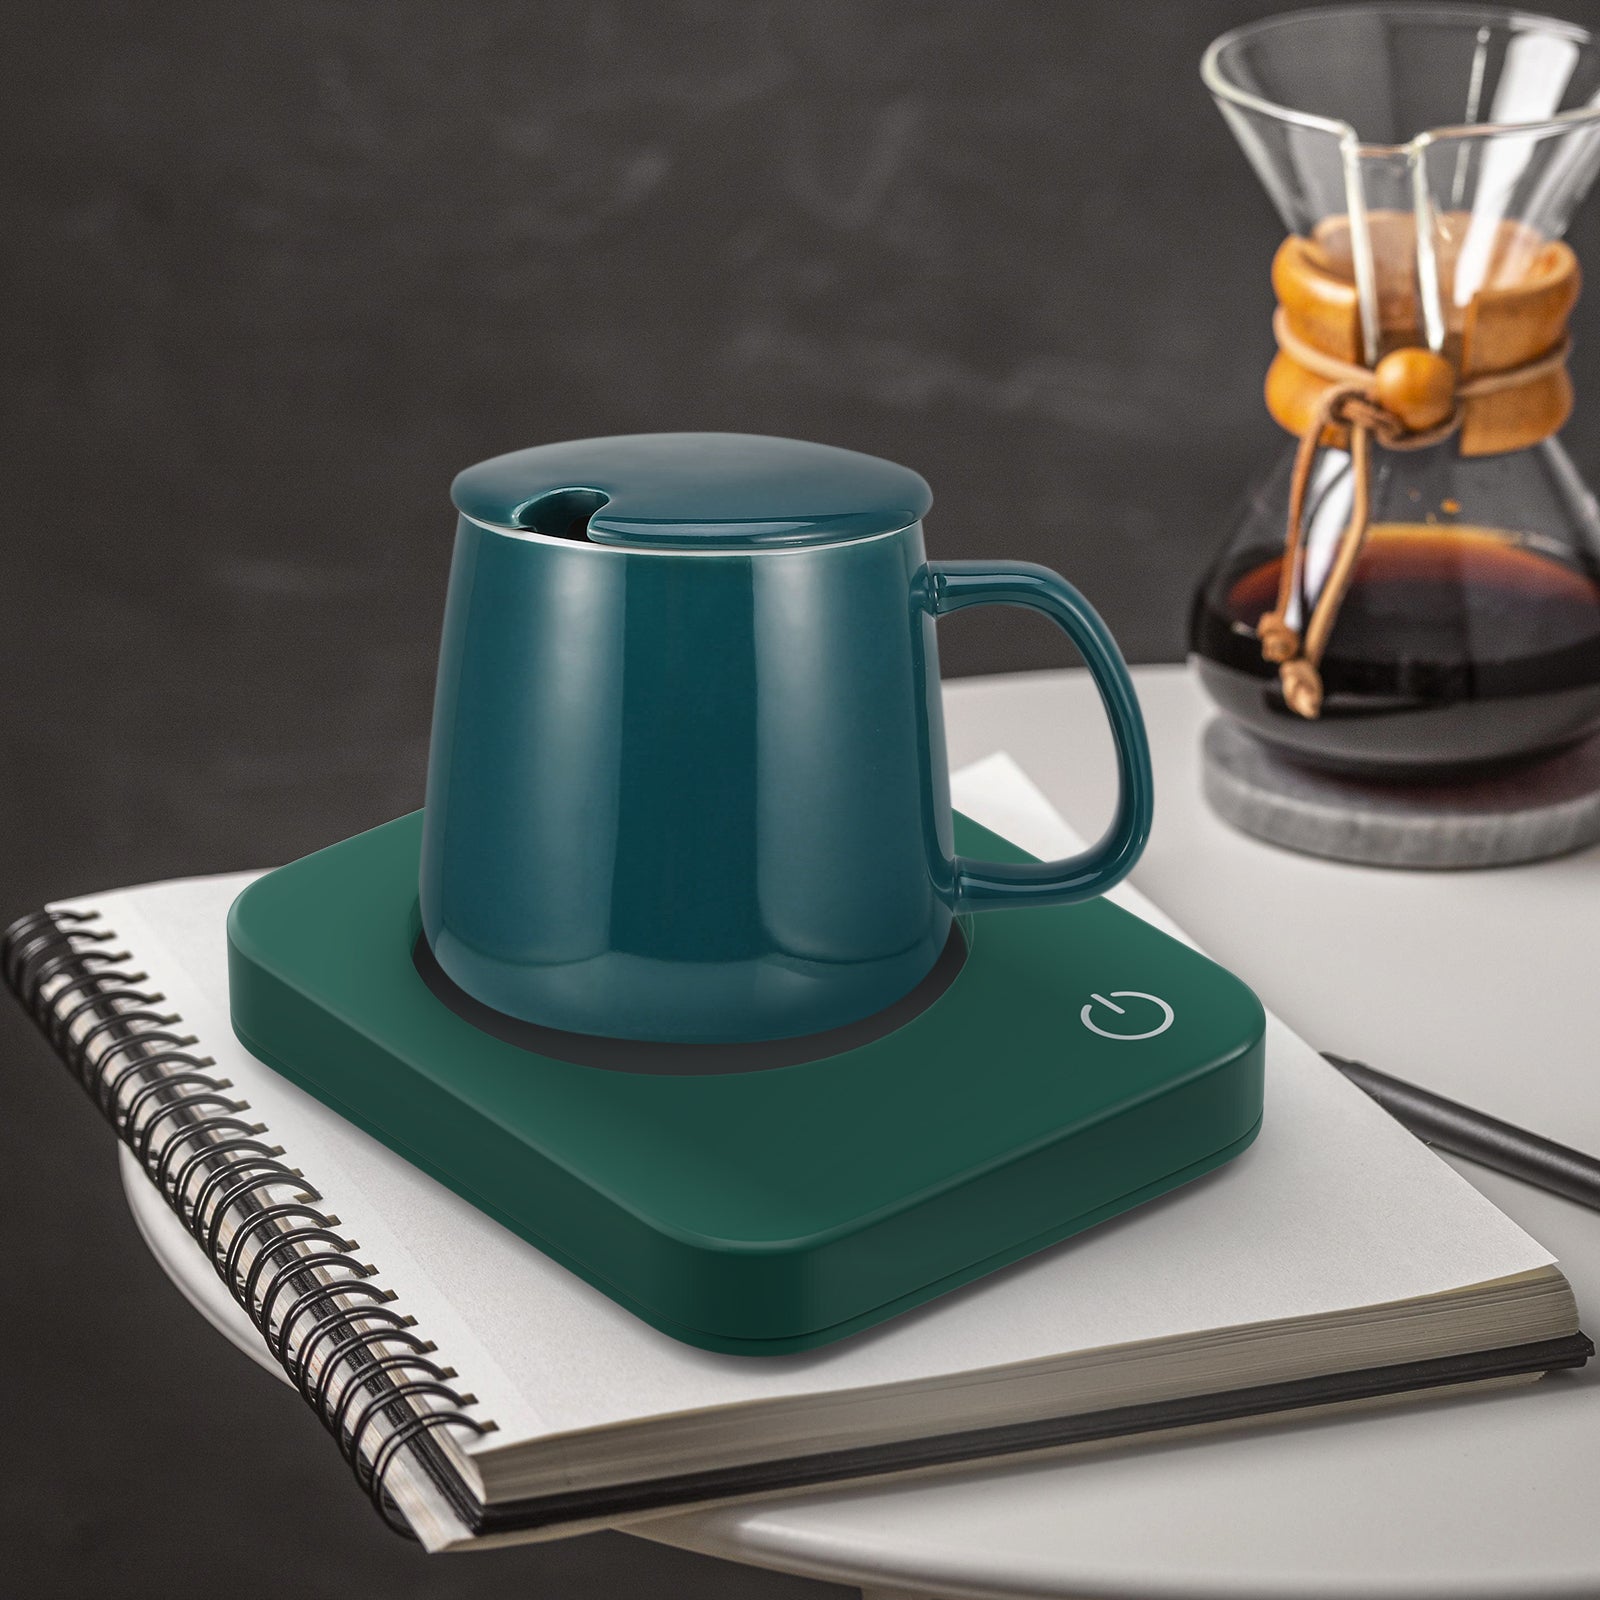 VOBAGA Coffee Cup with Lid and Flat-Bottom, 14 oz Tea Mug for Daily Use Warming Coffee&Tea (Green)